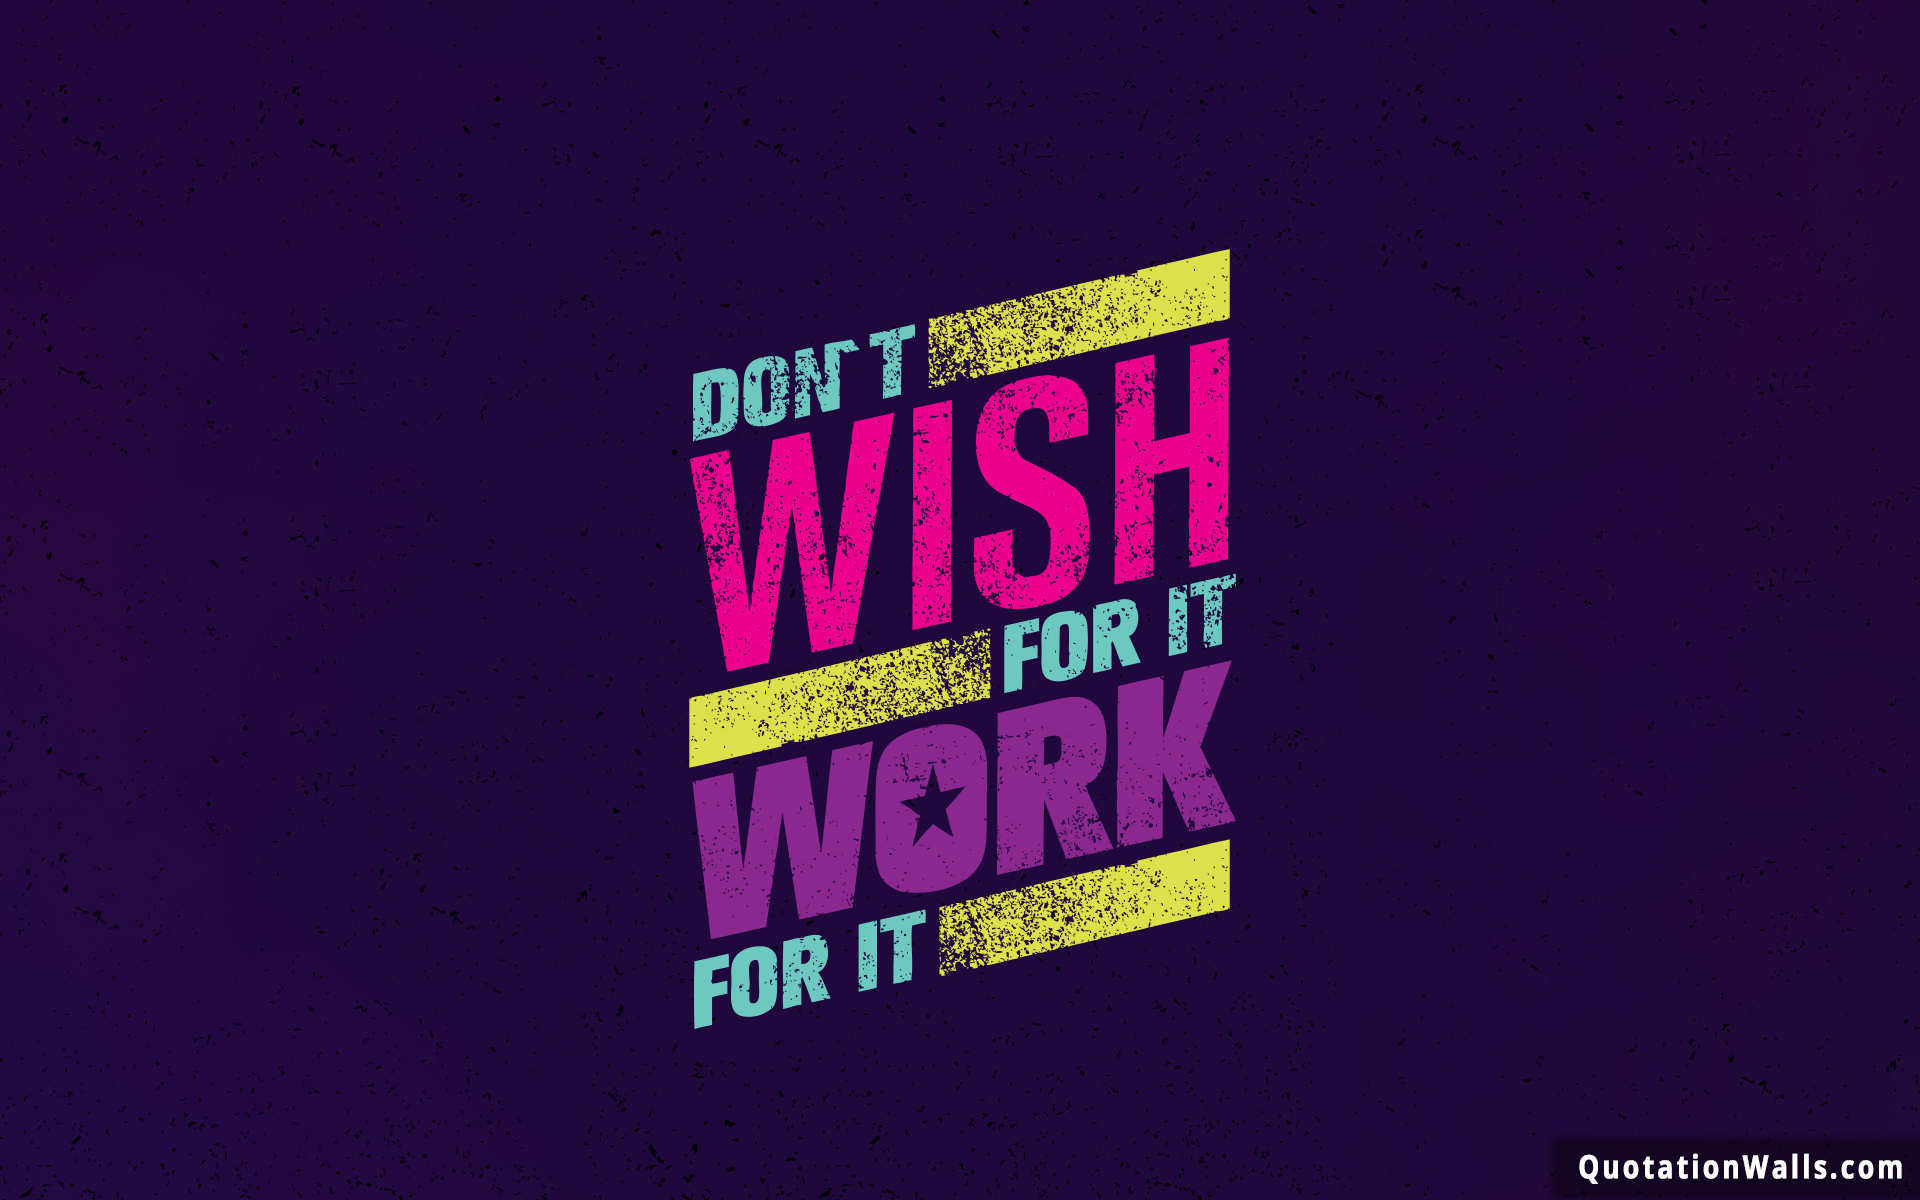 Work hard quotes wallpaper Work for it motivational wallpaper for desktop quotationwalls